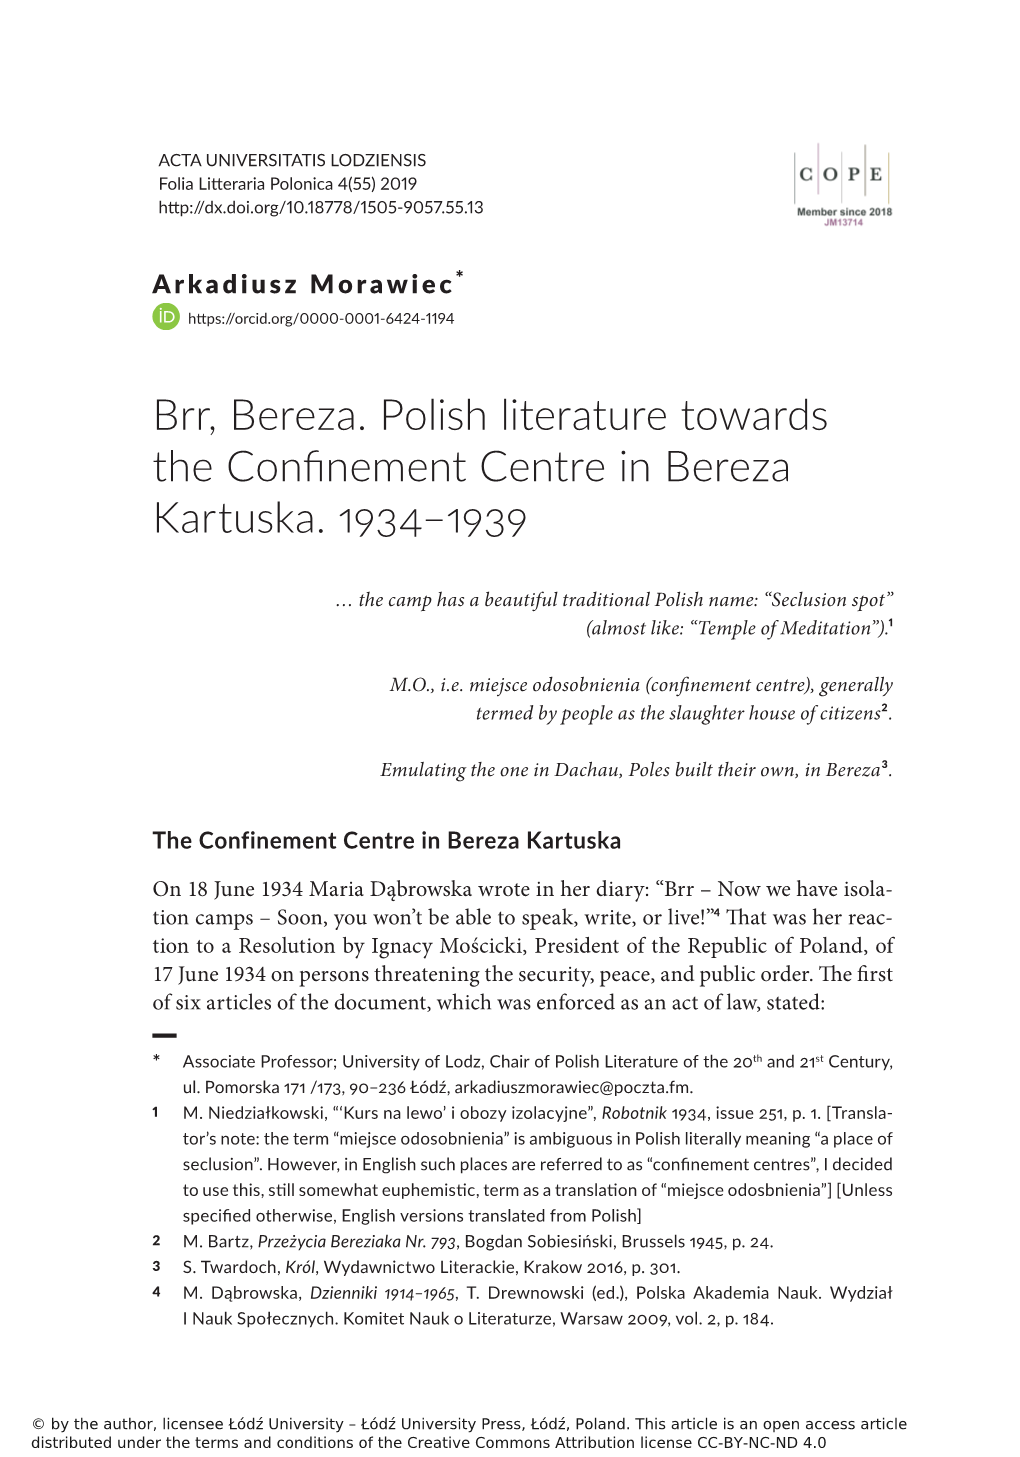 Brr, Bereza. Polish Literature Towards the Confinement Centre in Bereza Kartuska